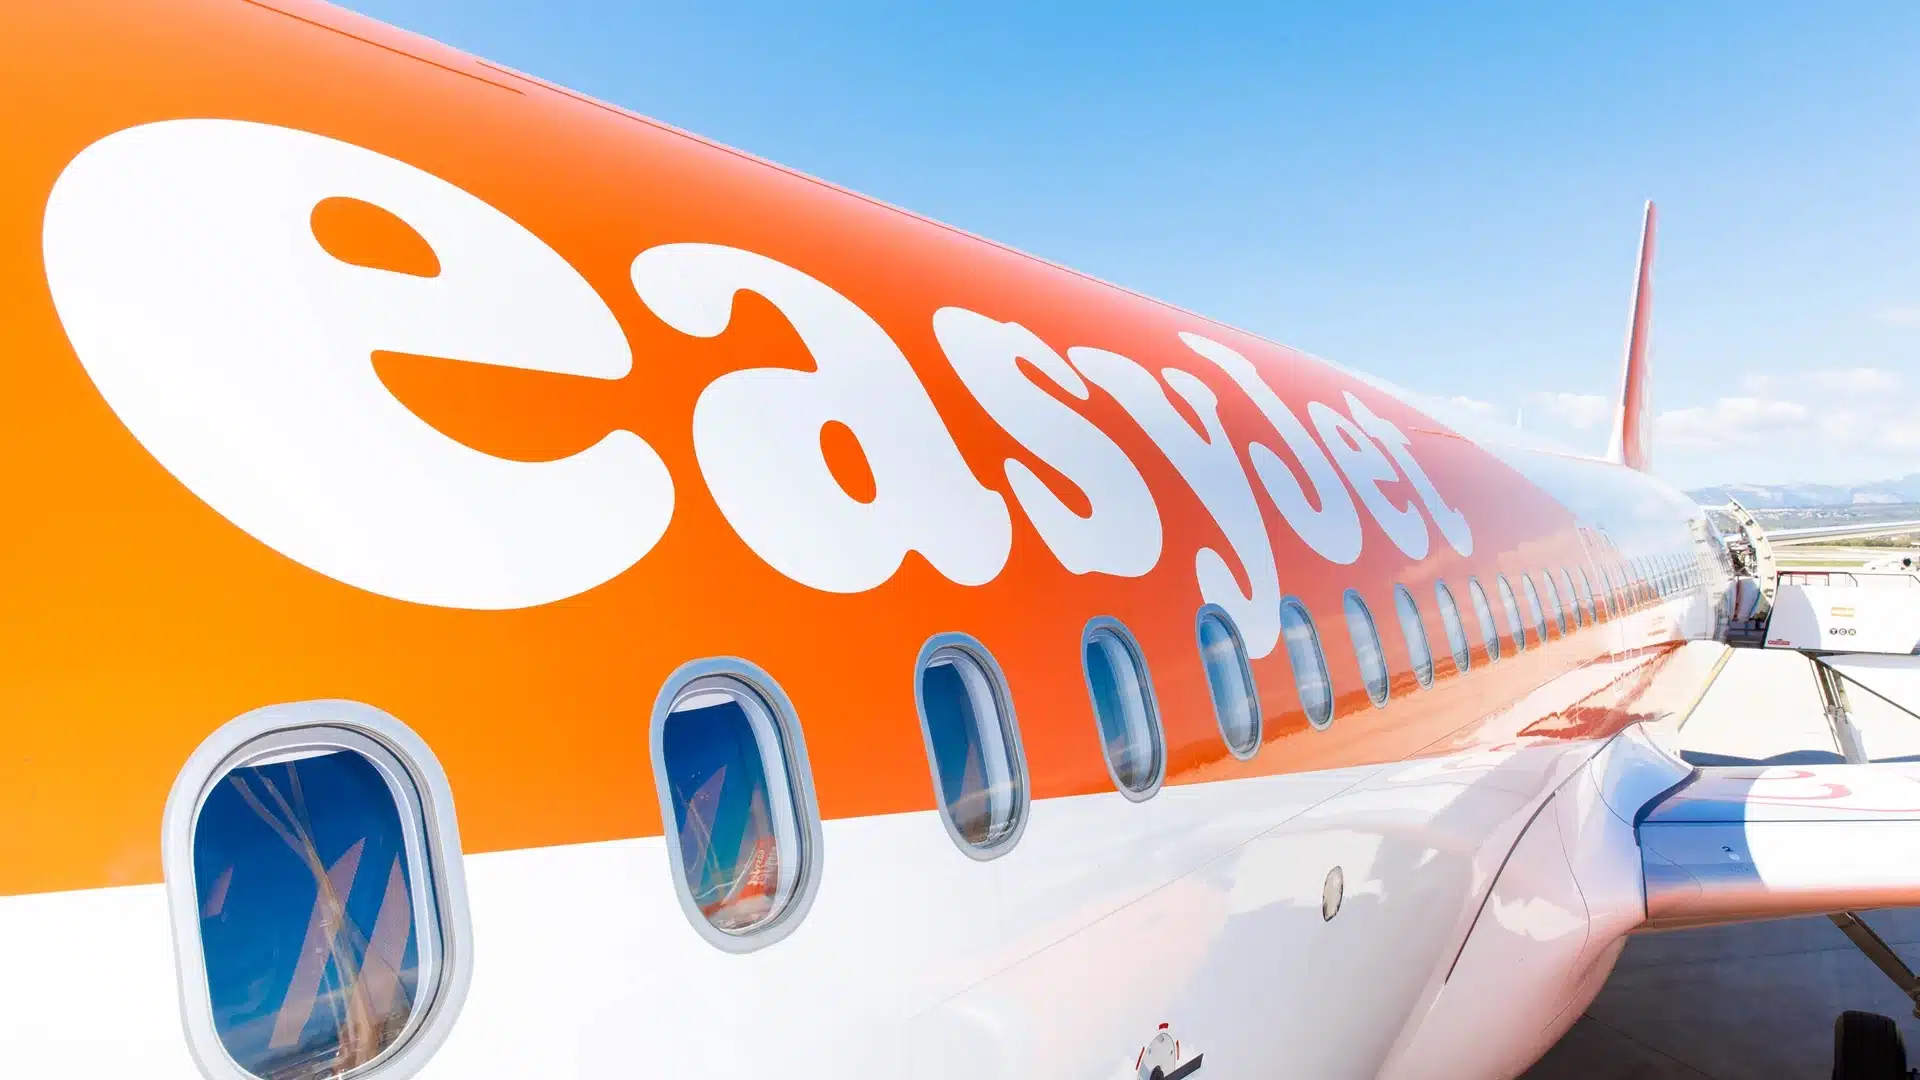 EasyJet Sets Medium Term Target of £1bn Annual Profit